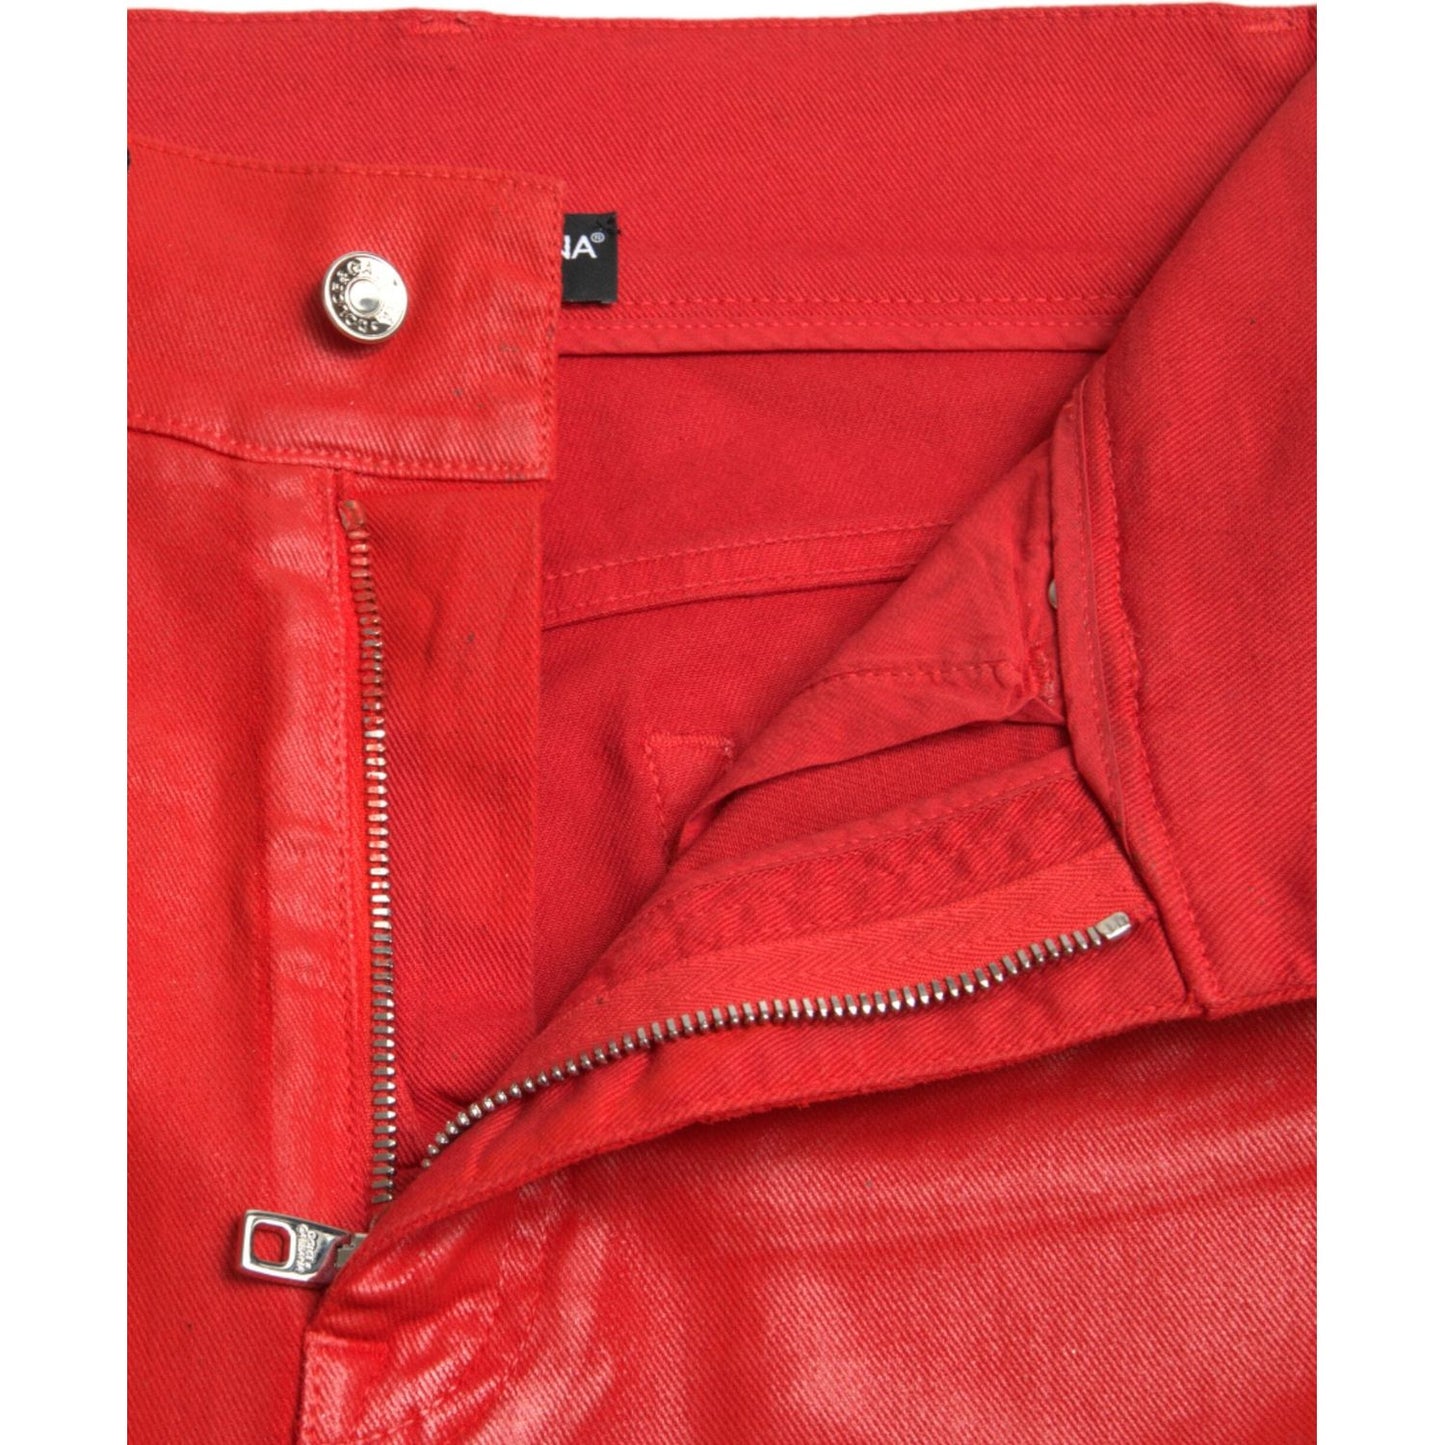 Dolce & Gabbana Red Cotton High Waist Skinny Denim Jeans red-cotton-high-waist-skinny-denim-jeans 465A2815-BG-scaled-ce074f1a-311.jpg